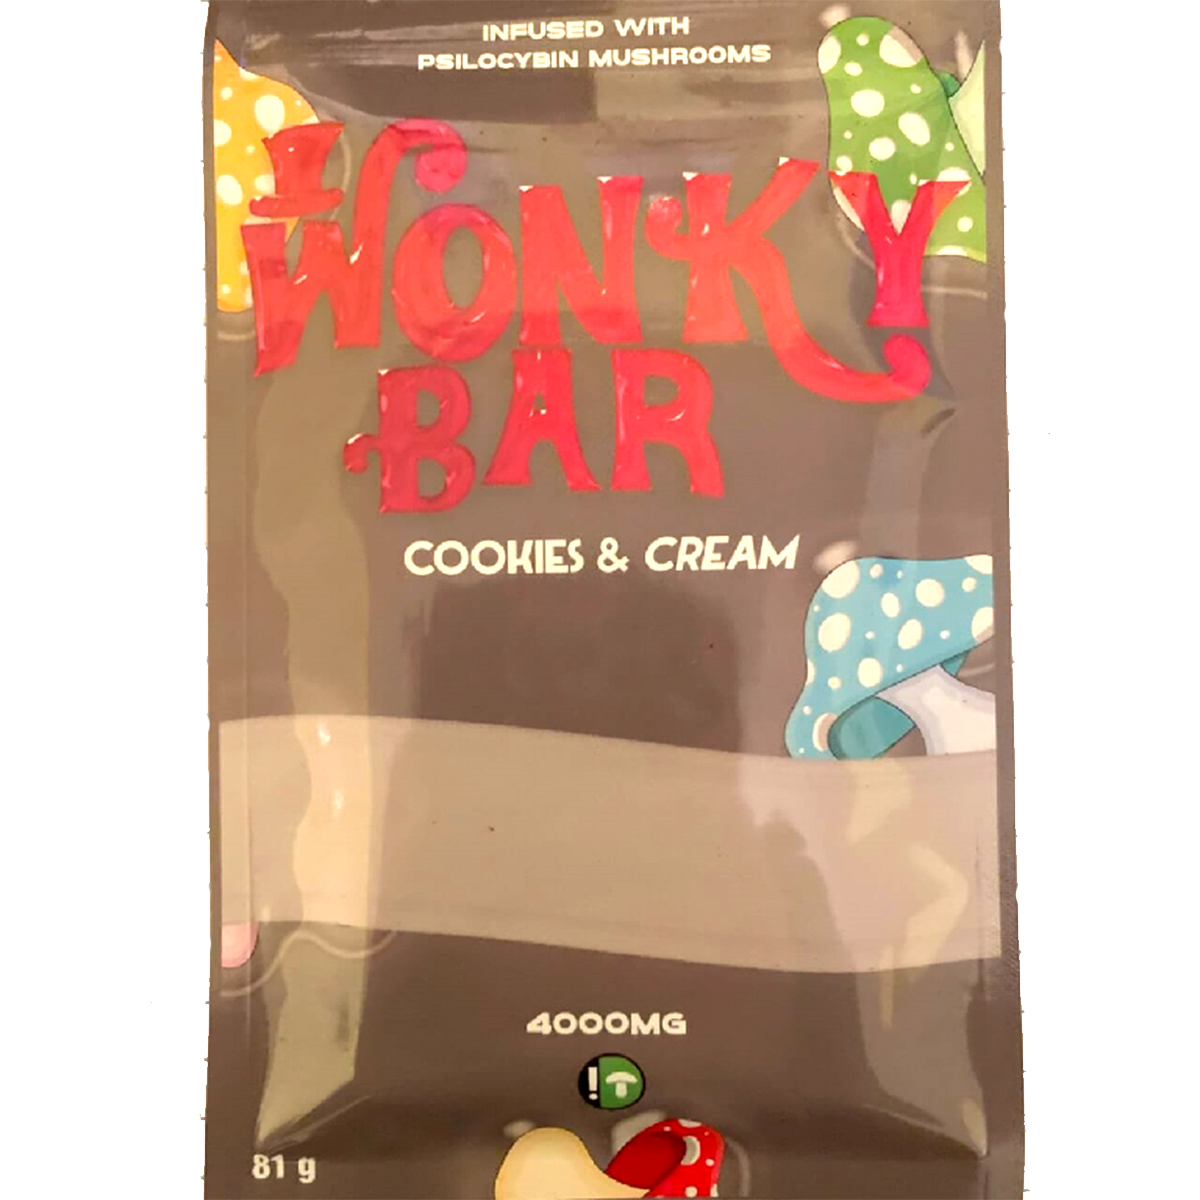 Wonky Bar Cookies Cream